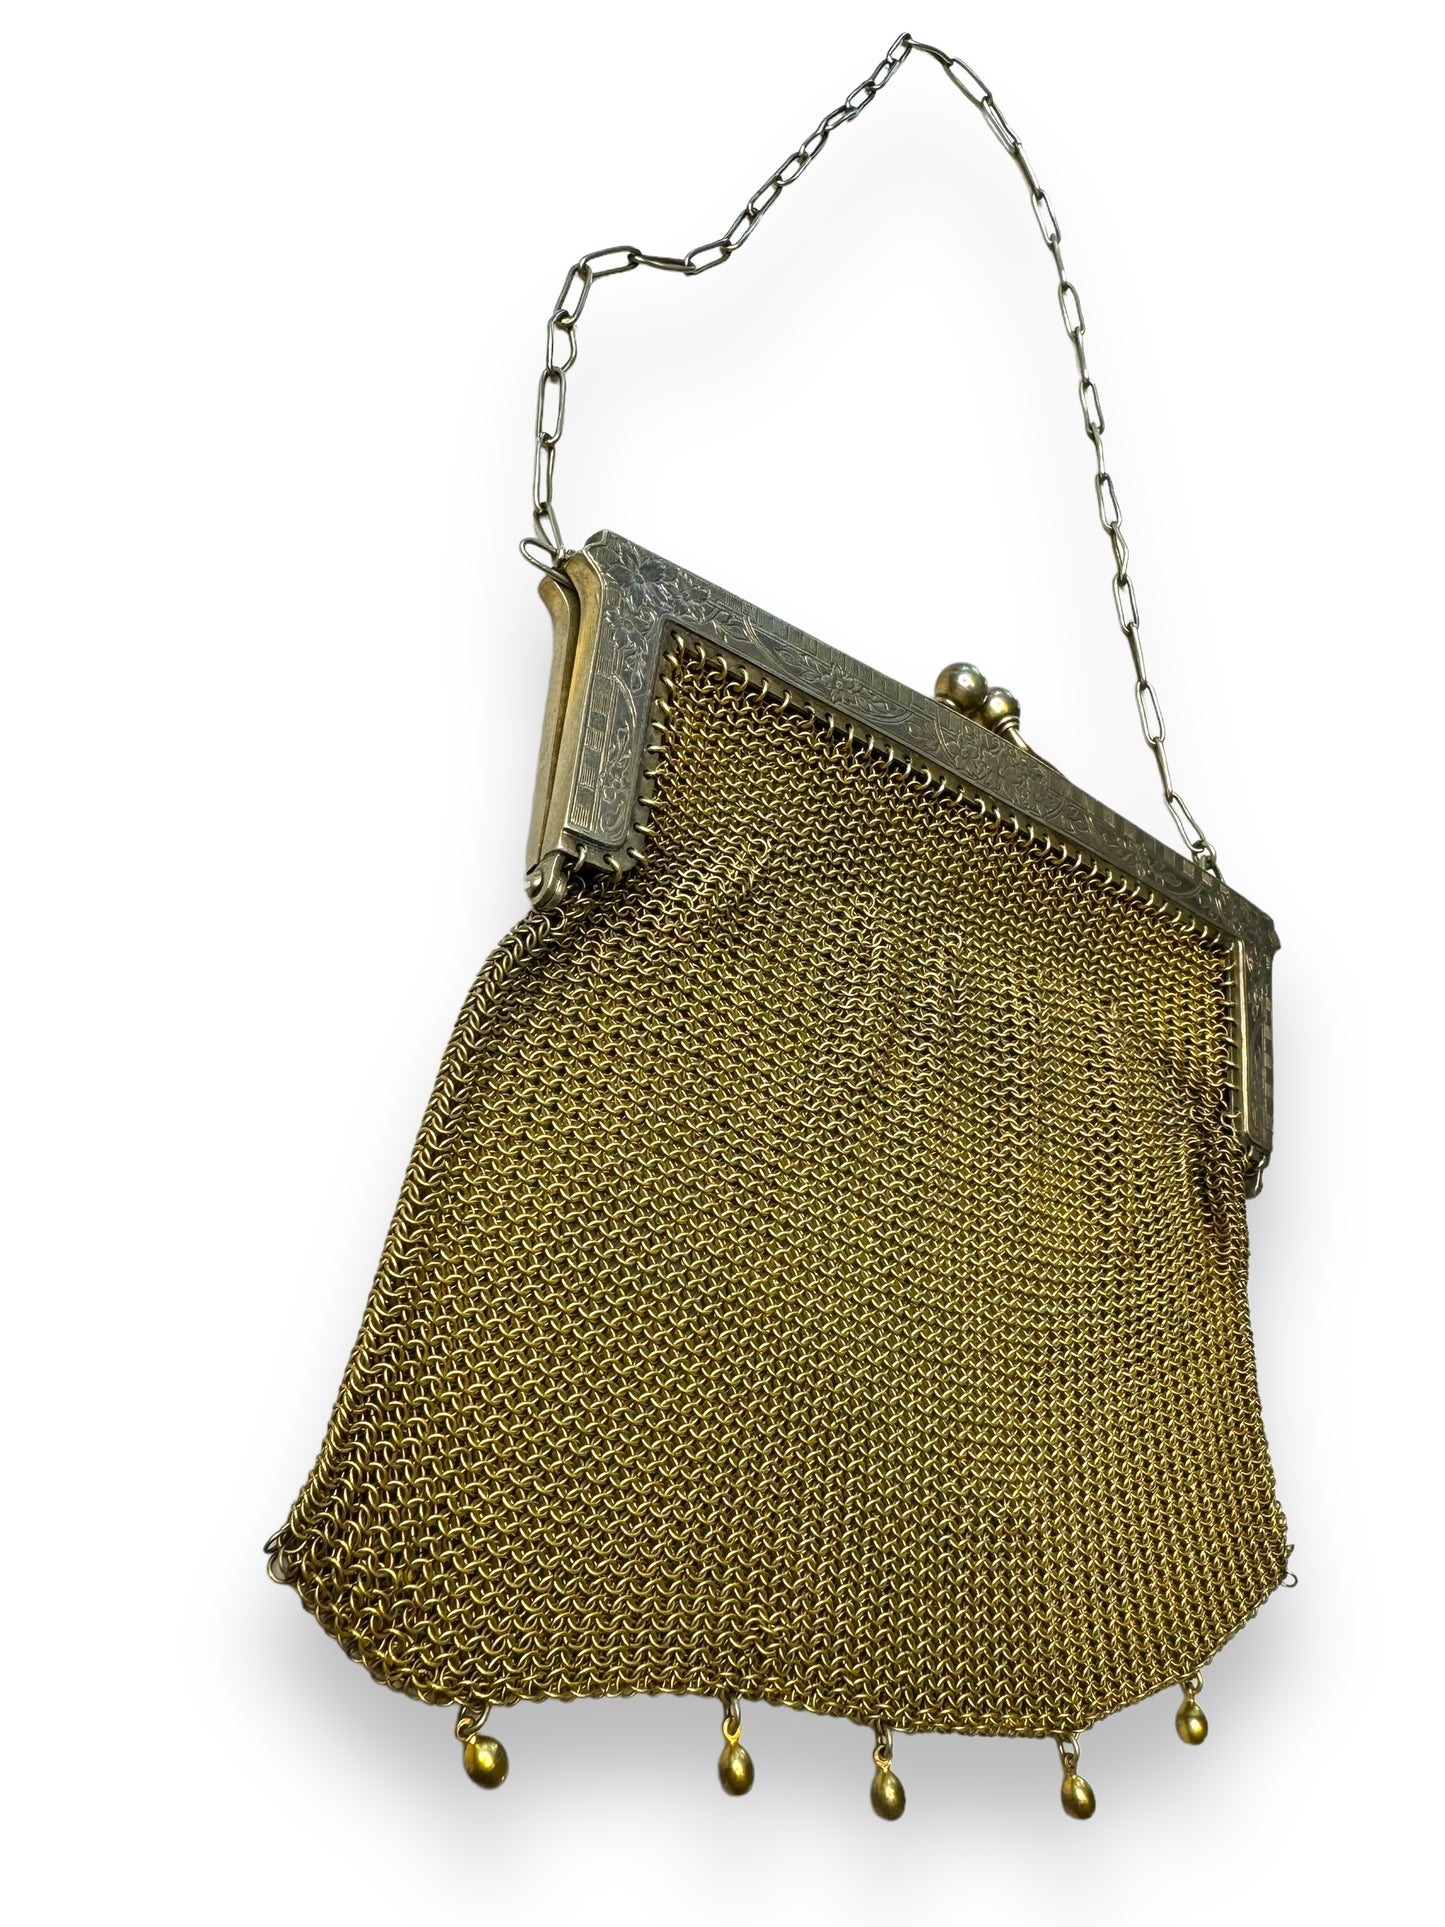 1940s Copper Kiss Lock Frame Bag